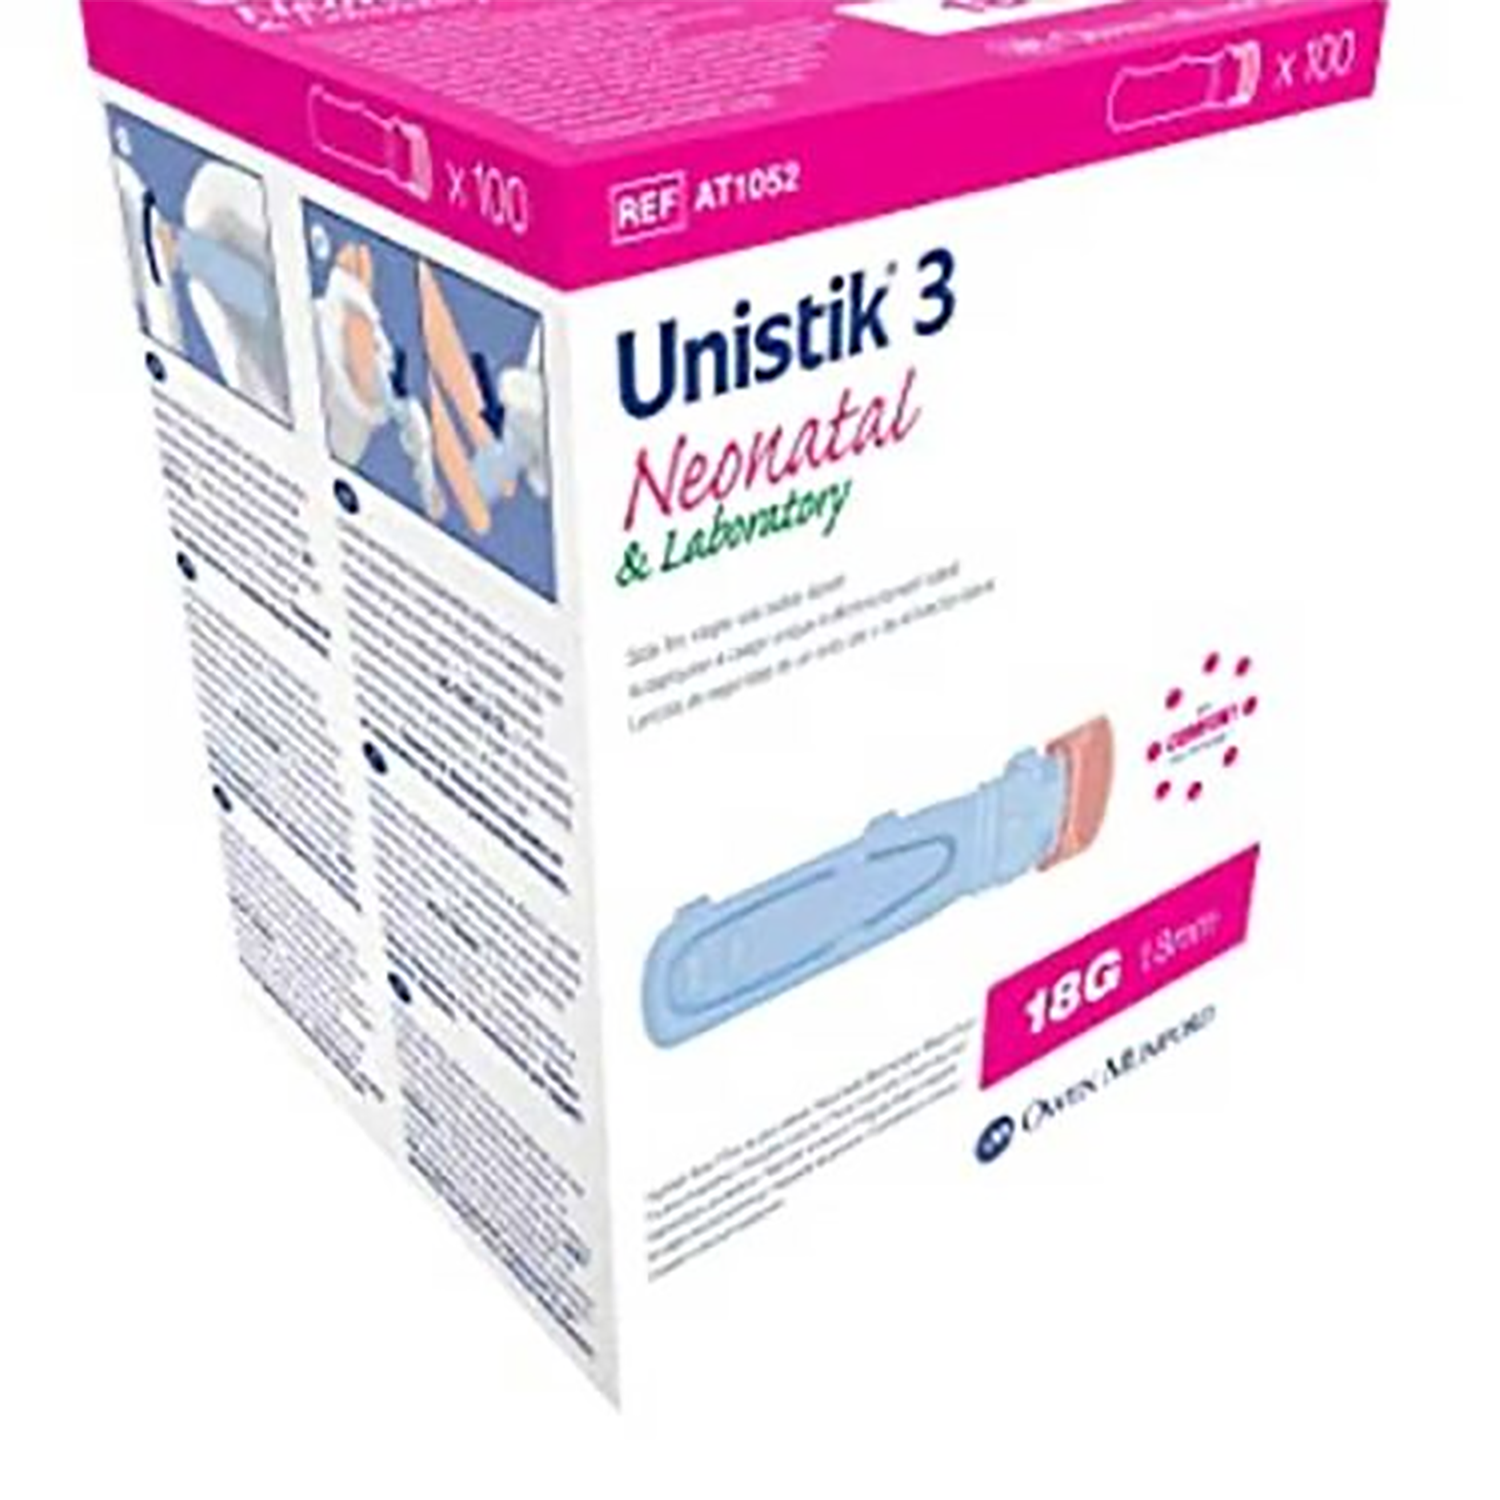 Unistik 3 Neonatal & Laboratory Lancets | Blue | 18G | 1.8mm | Pack of 100